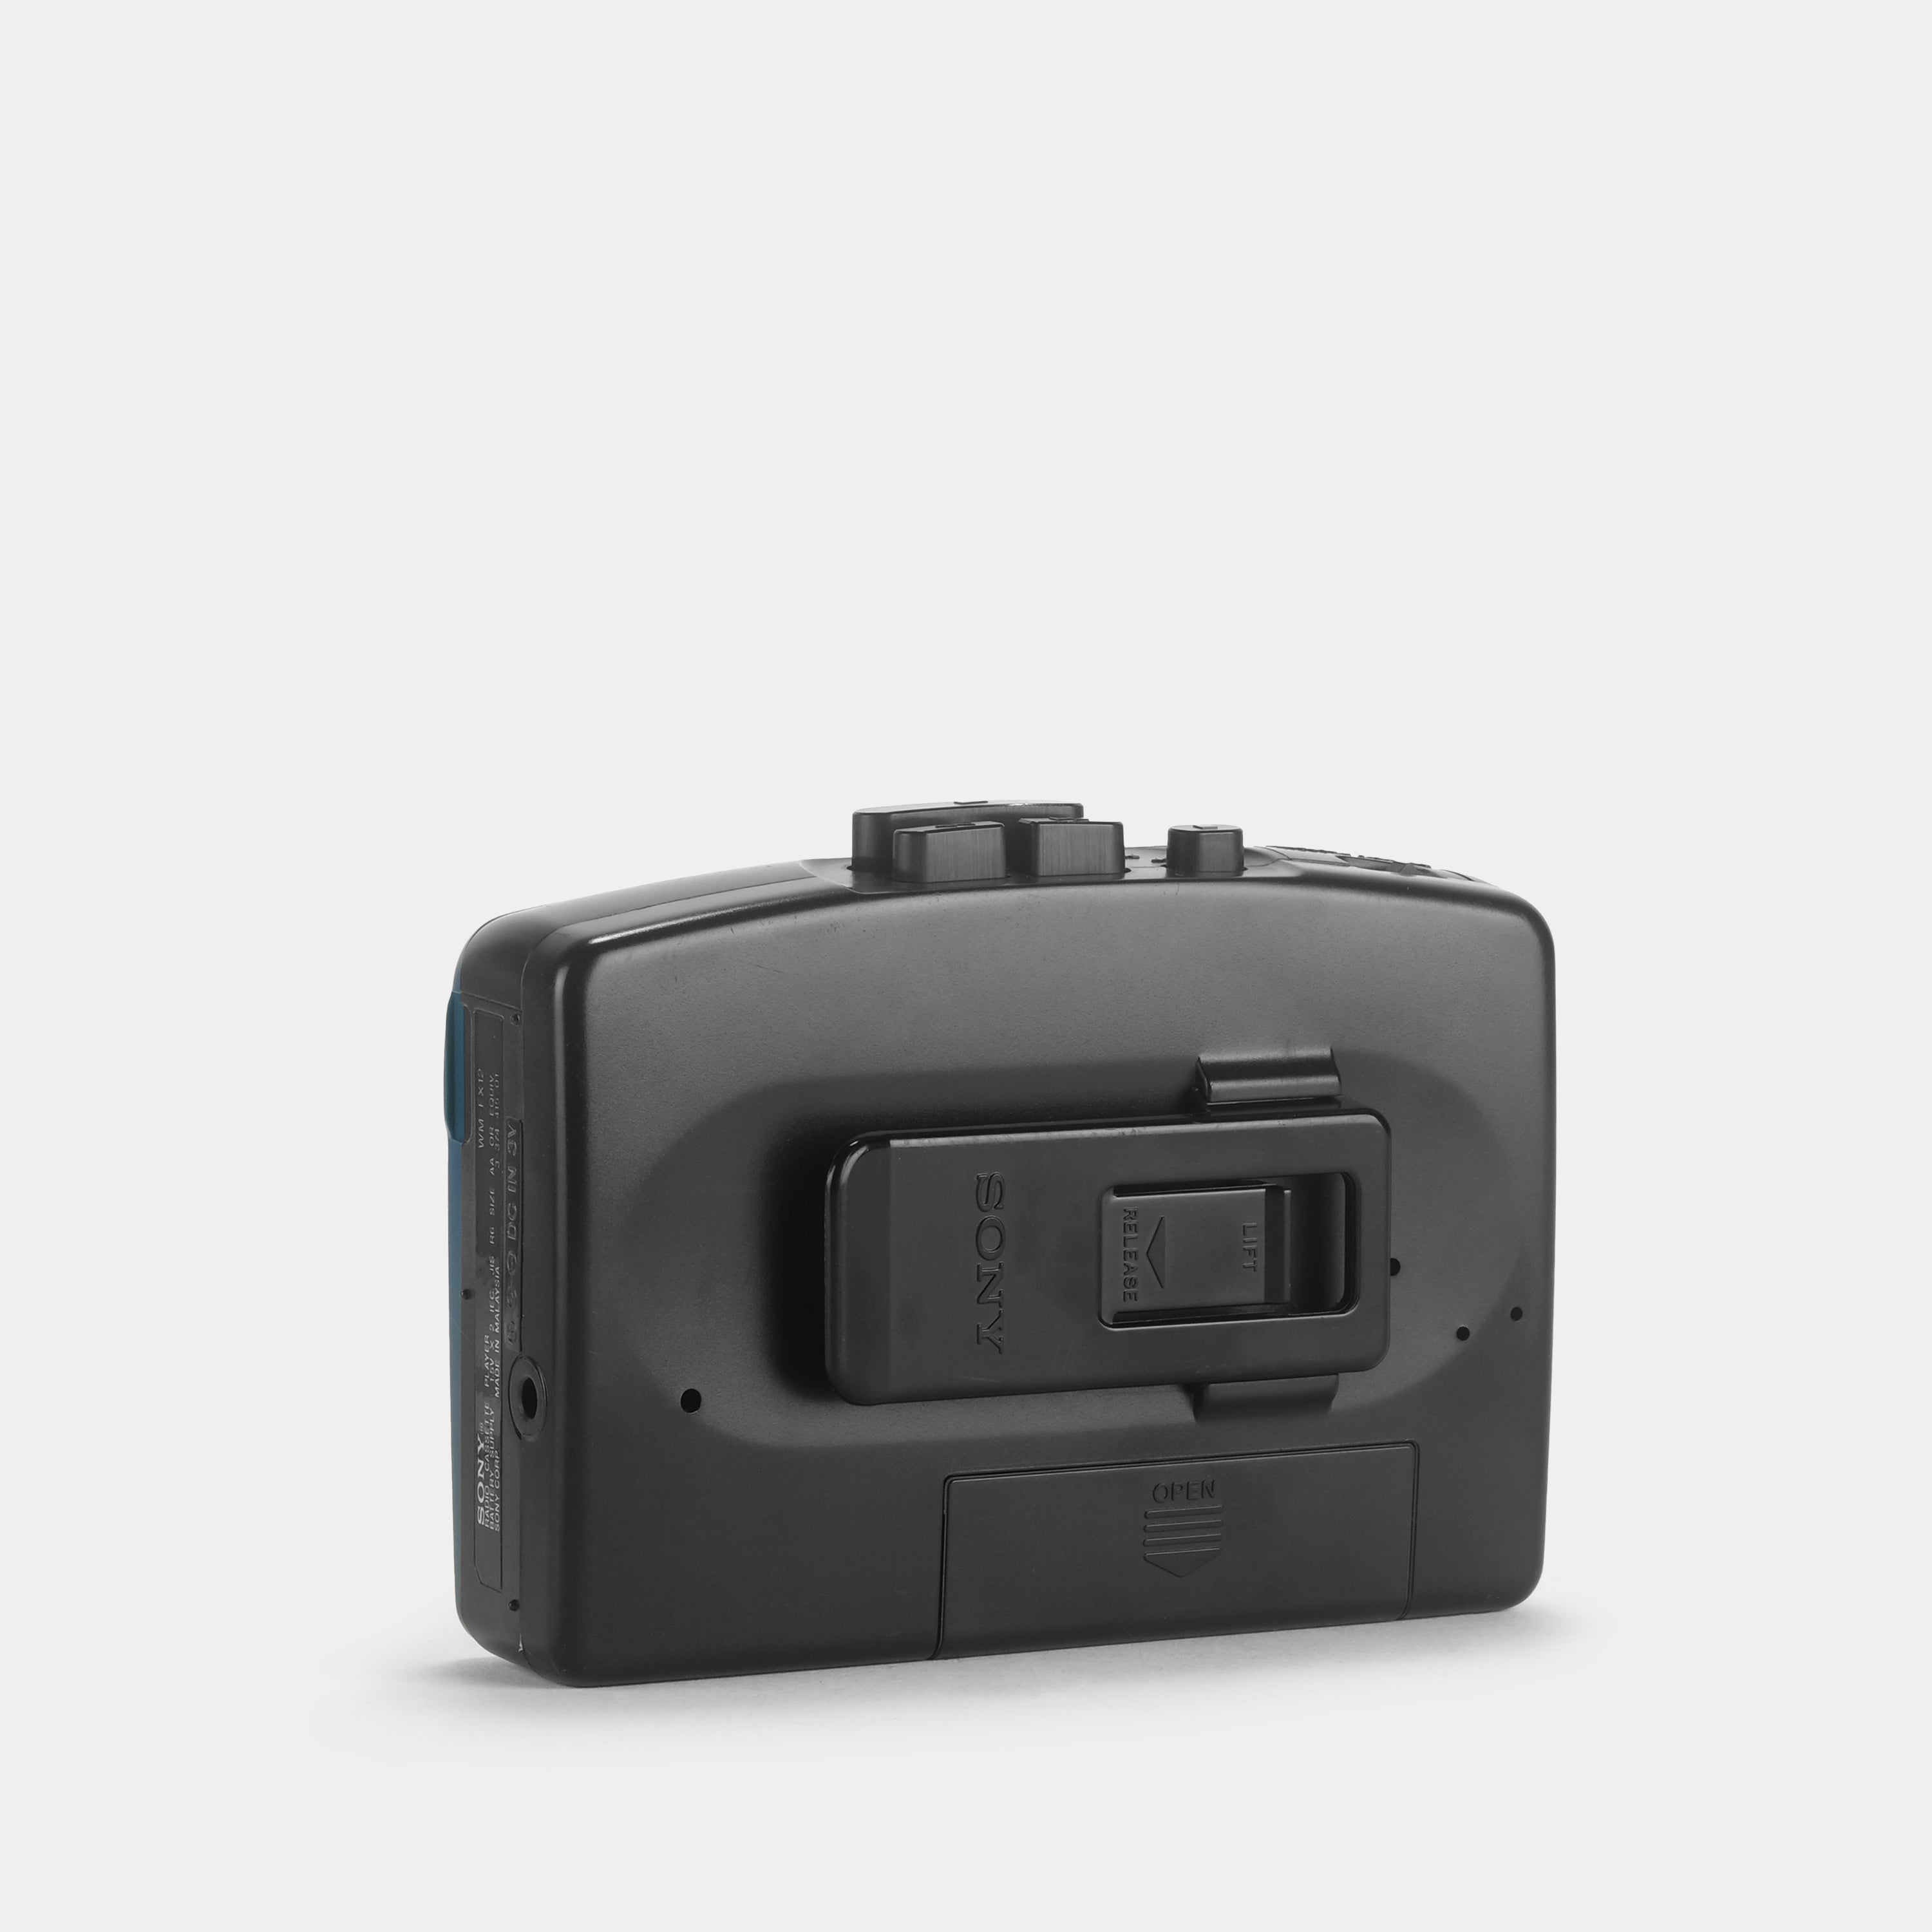 Sony Walkman WM-FX12 AM/FM Teal Portable Cassette Player